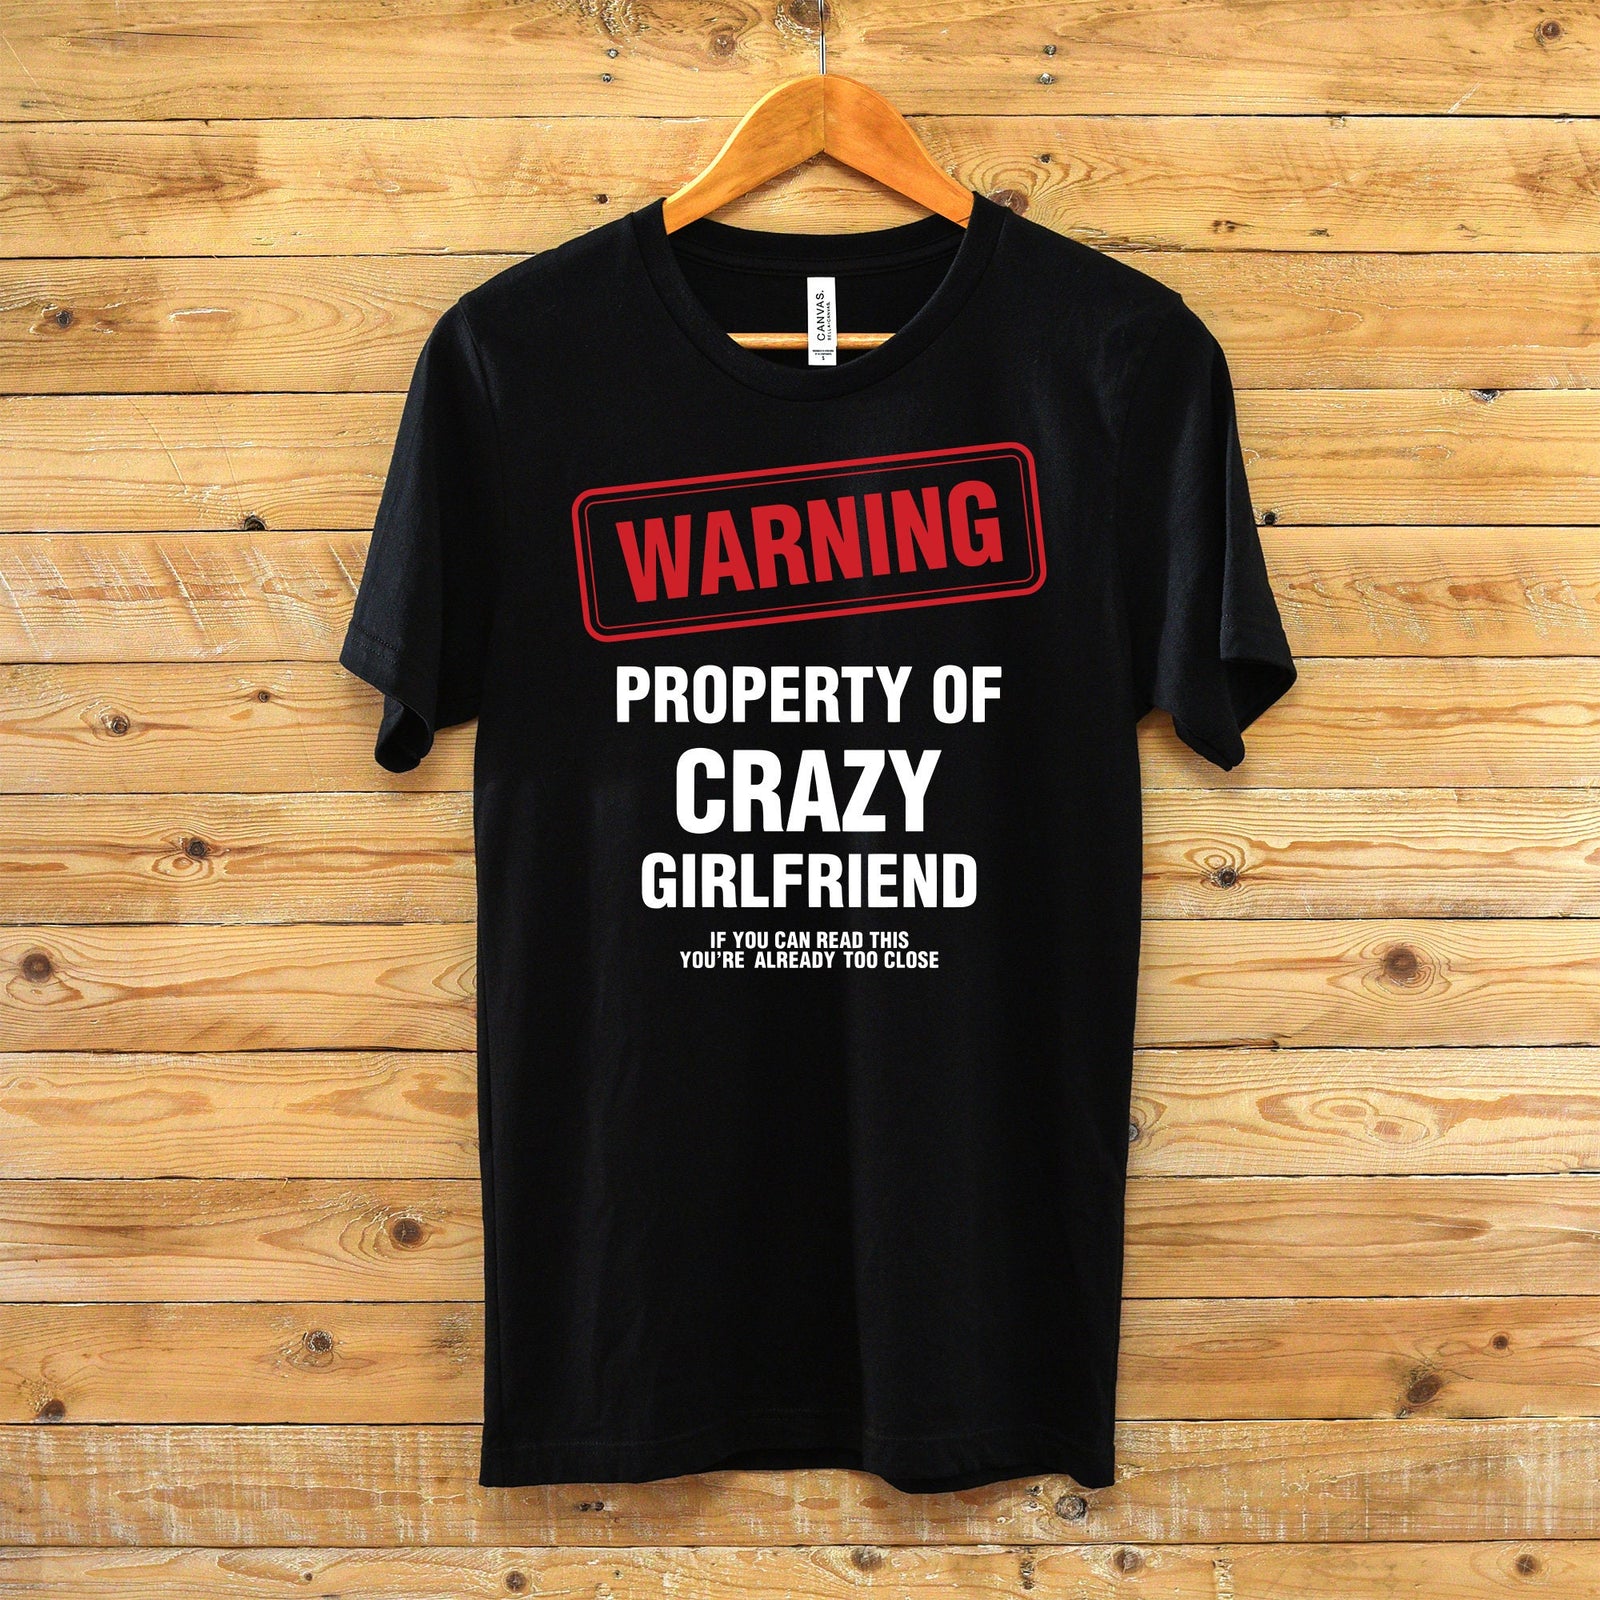 Warning Property of a Crazy Girlfriend Funny Statement Shirt- Funny Men's T-shirt - Girlfriend Humor T-shirts - Boyfriend Gift Idea Shirt